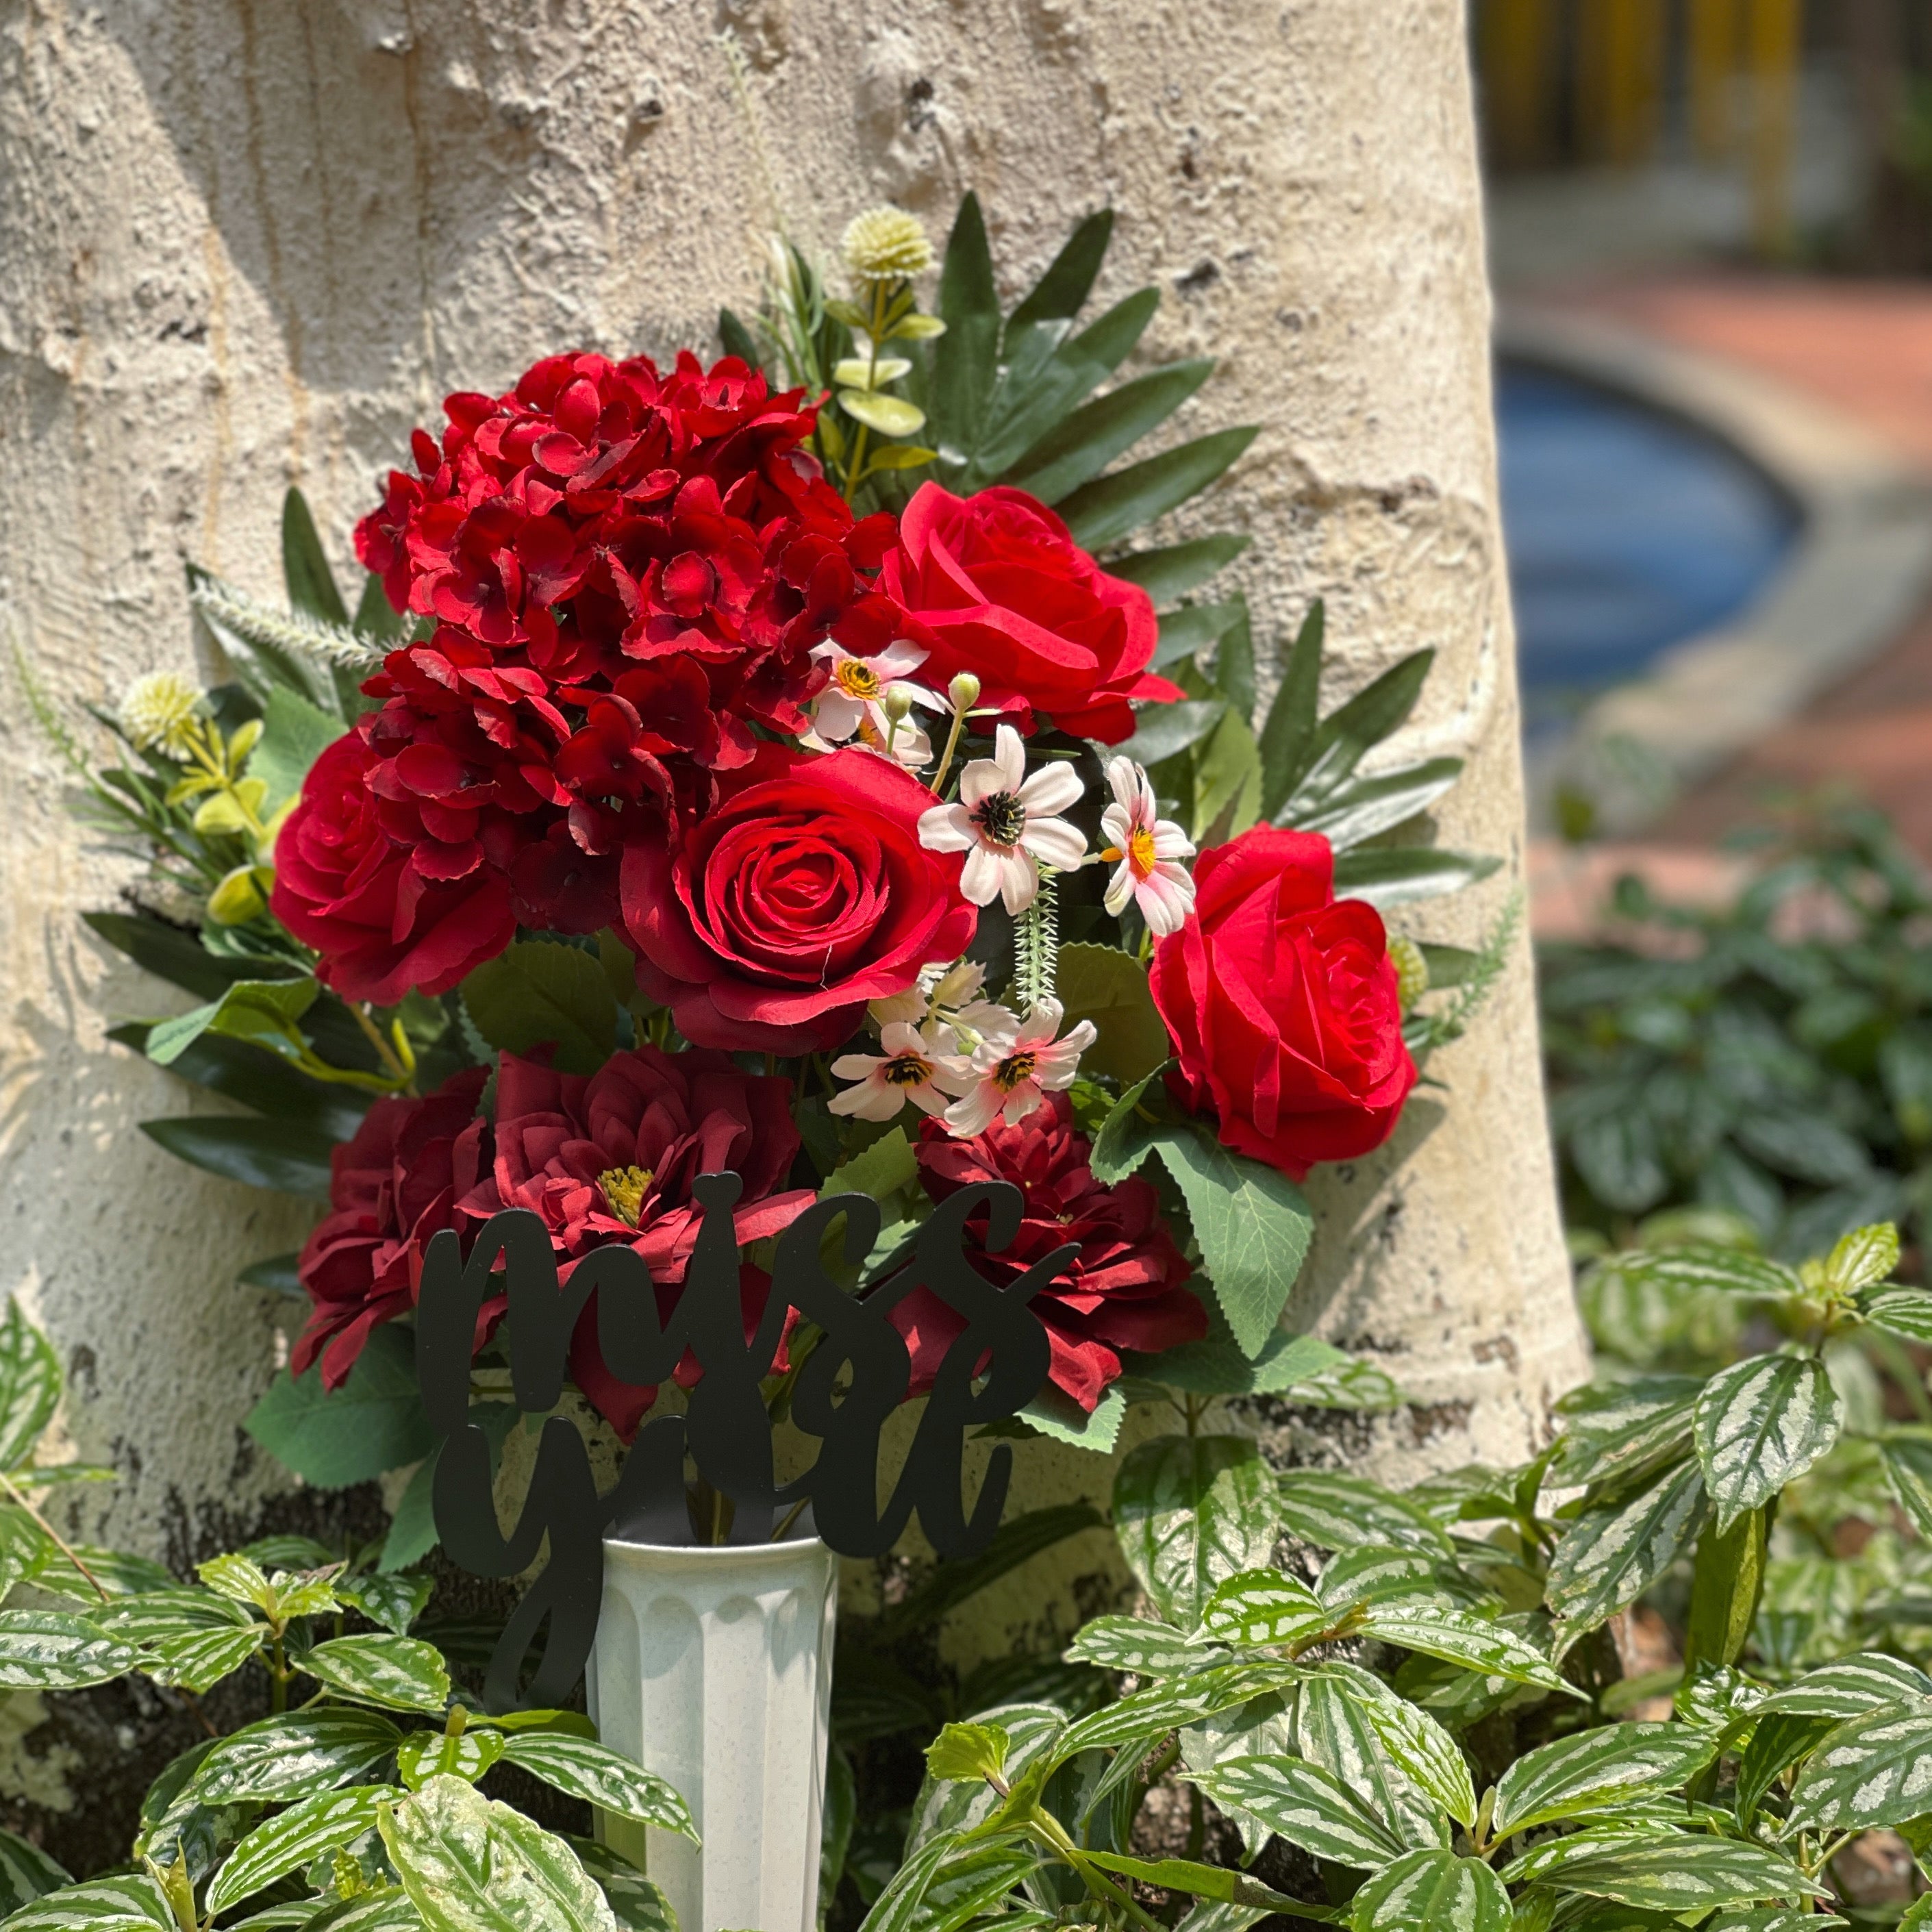 Bulk Summer Memorial Flowers with Vase Red Rose Graveyard Grave Flowers Wholesale